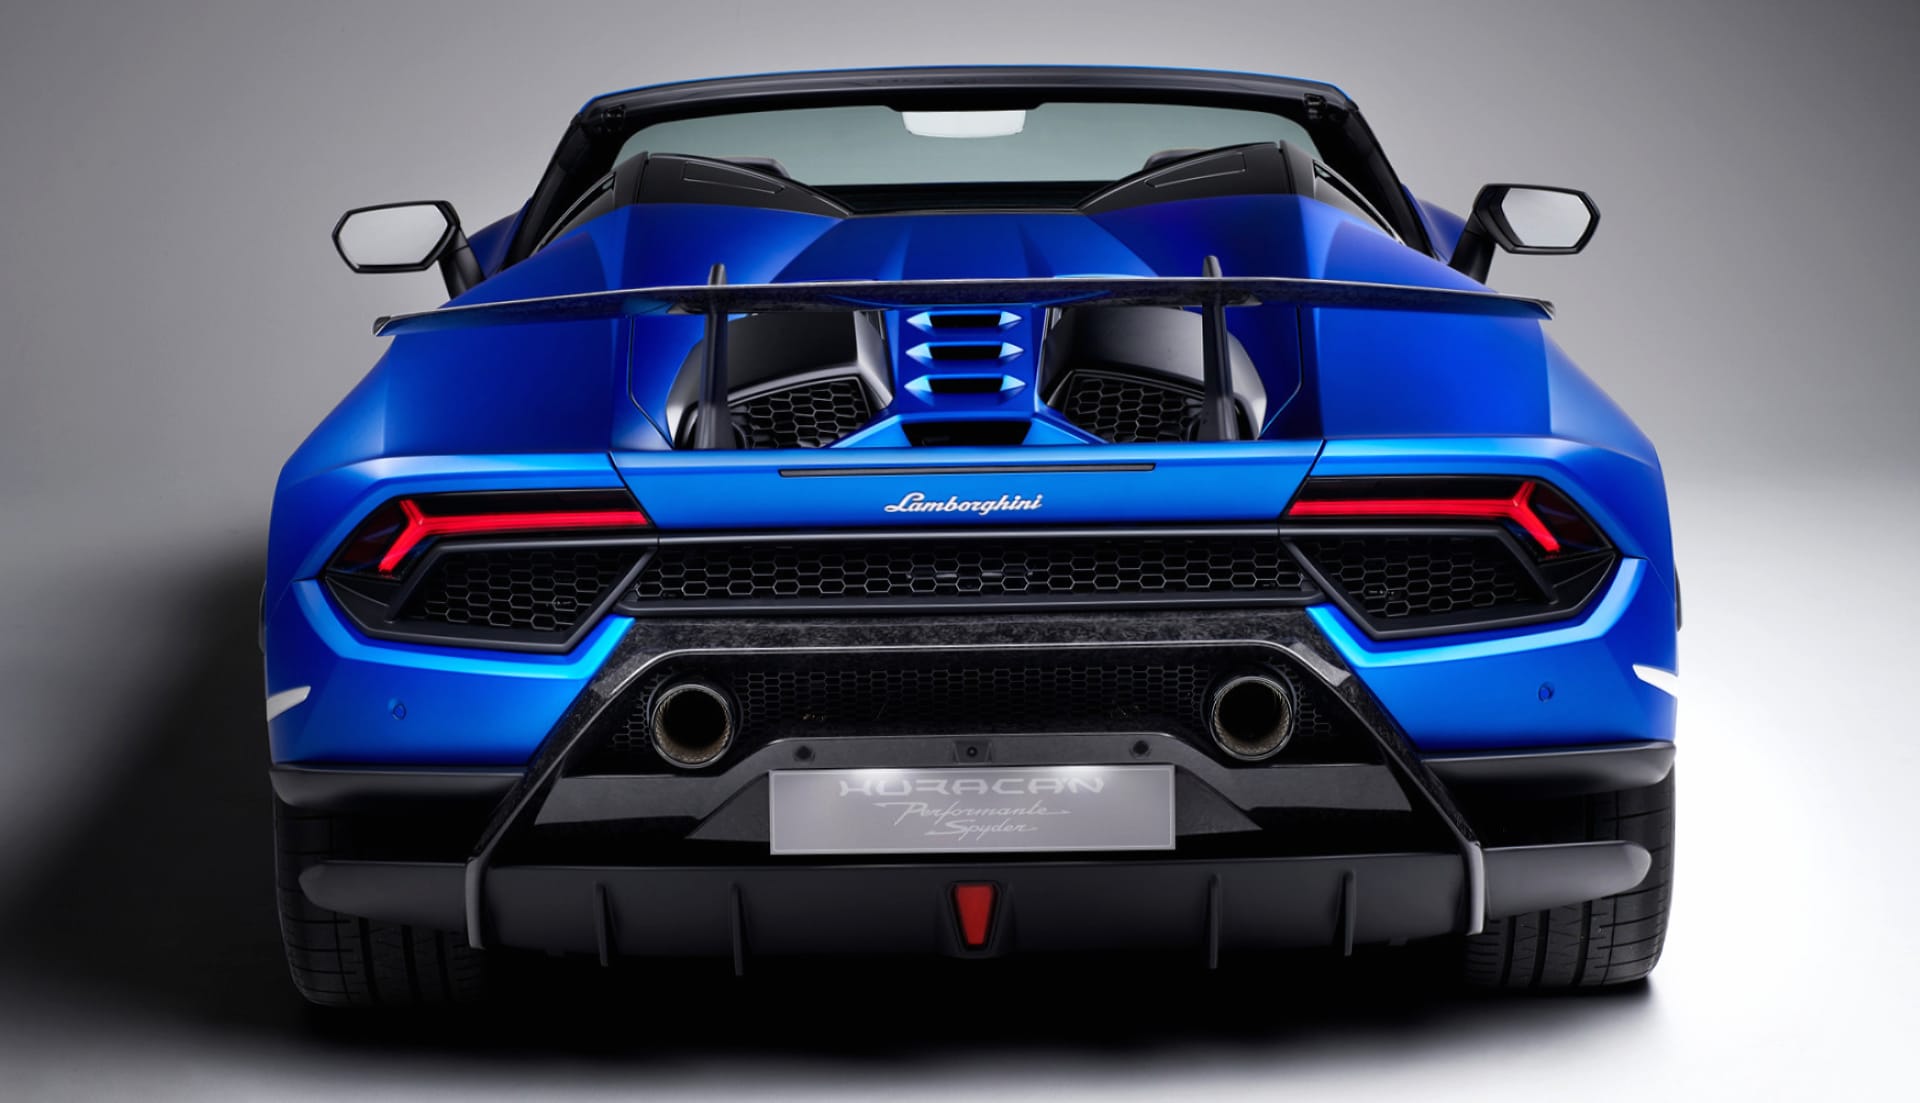 Lamborghini Huracan LP 640-4 Performante Spyder at 1024 x 1024 iPad size wallpapers HD quality